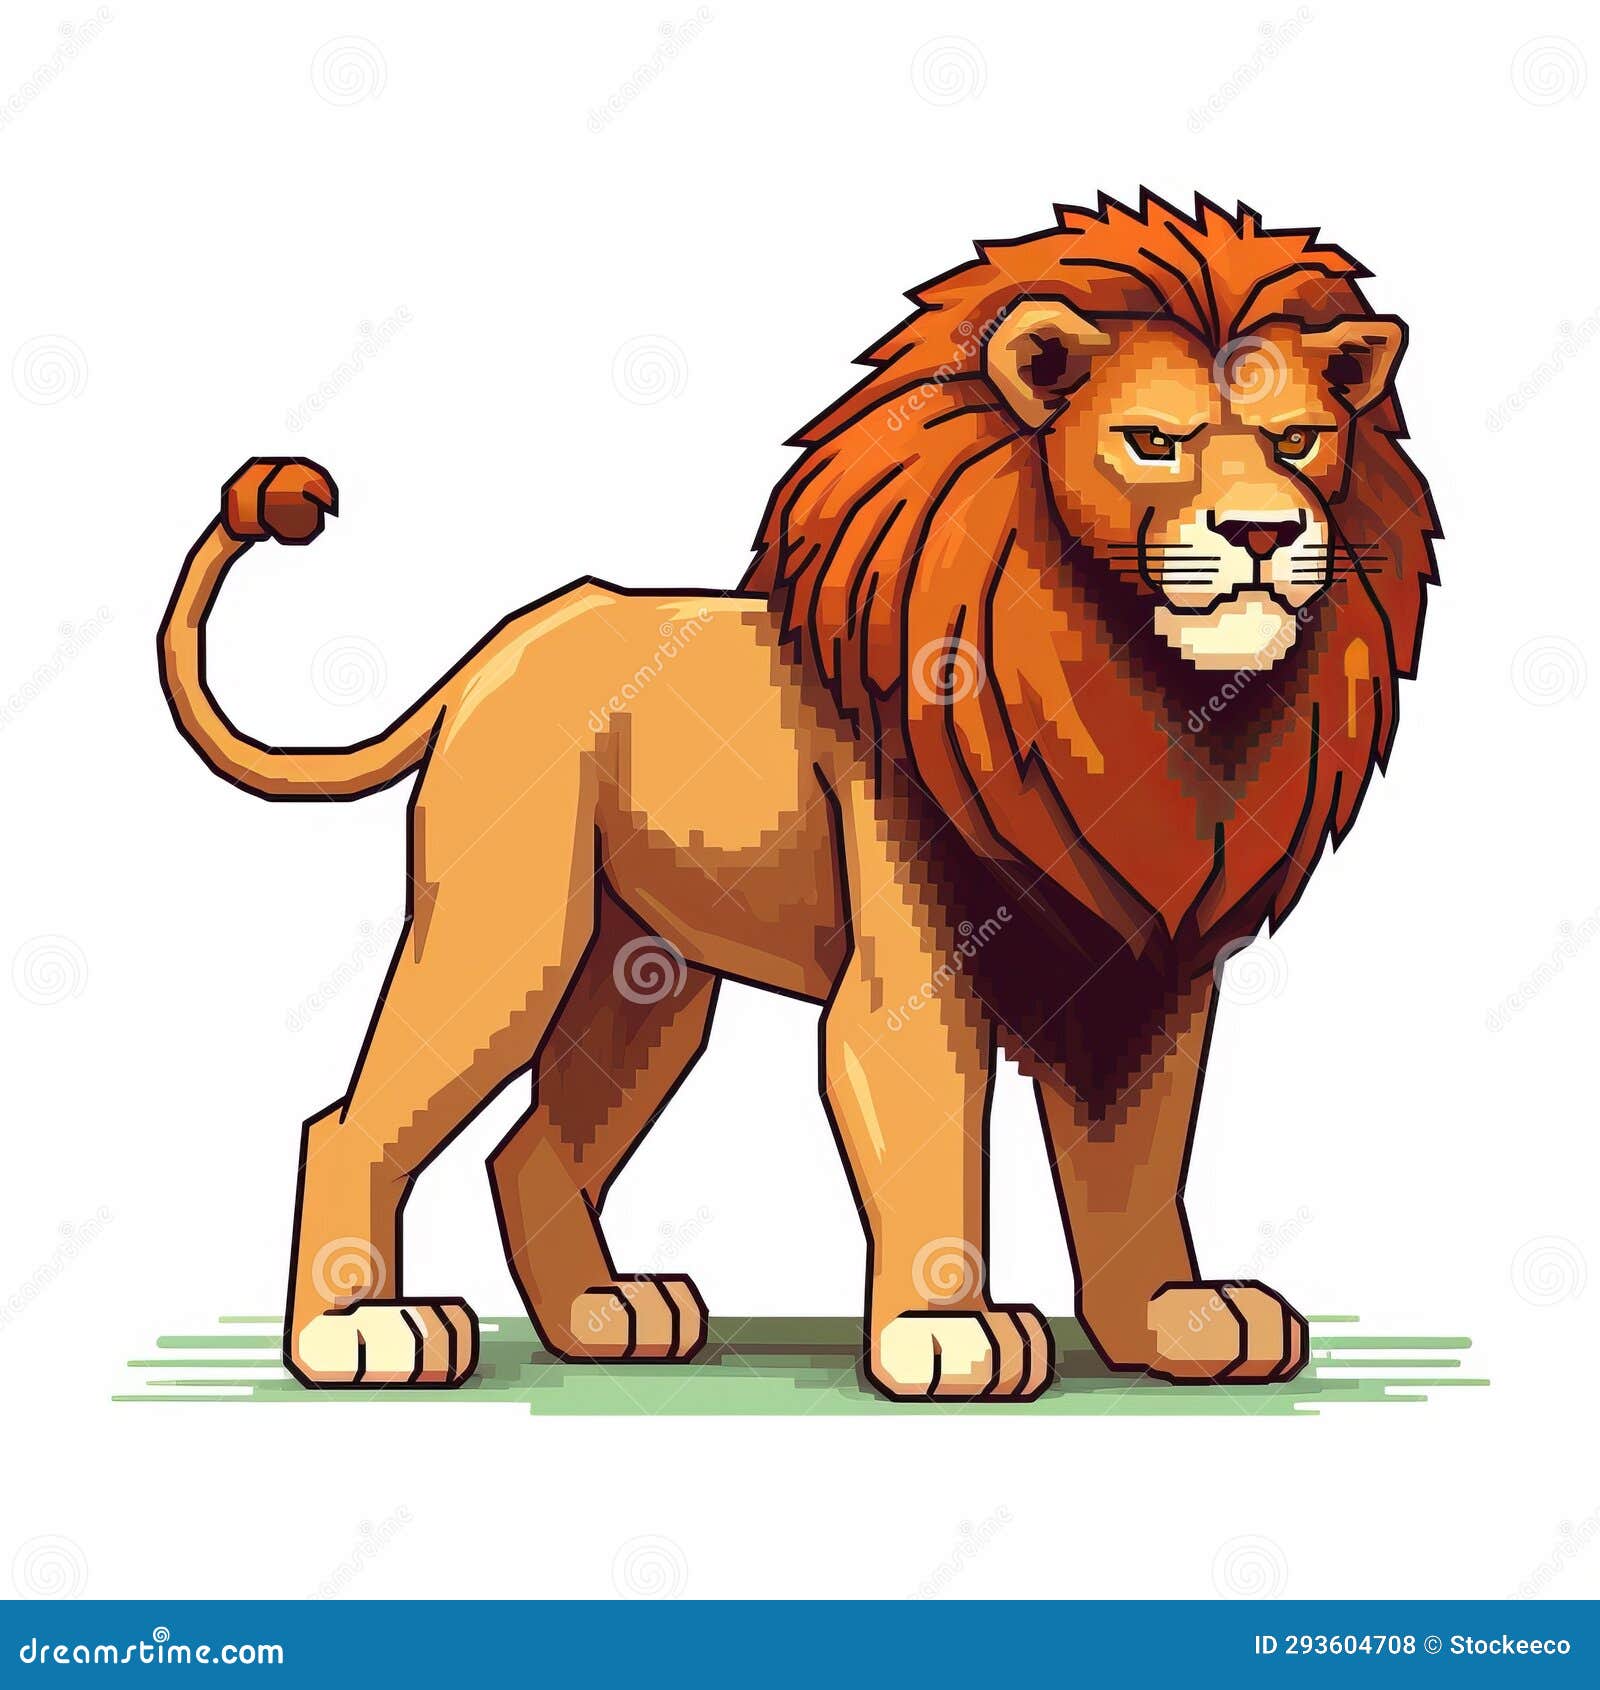 detailed realism: mythological lion in pixel art style